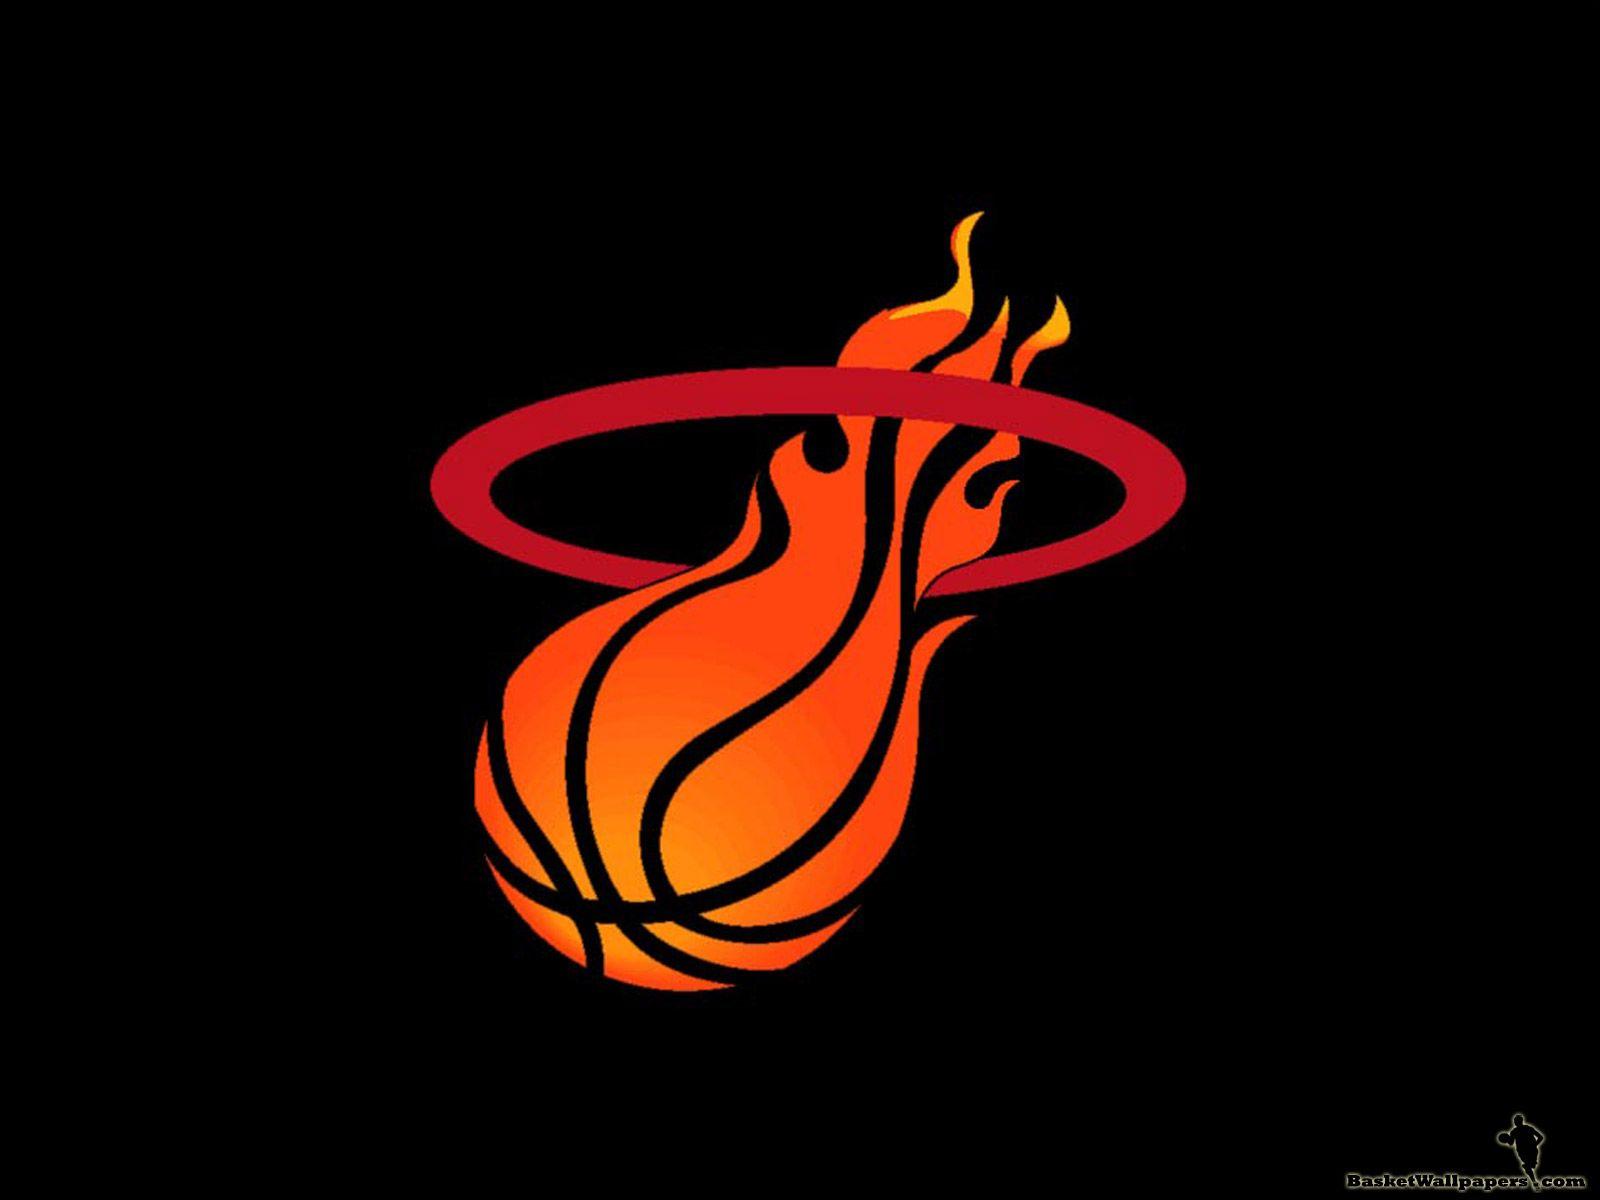 Miami Heat Logo Wallpaper. Basketball Wallpaper at